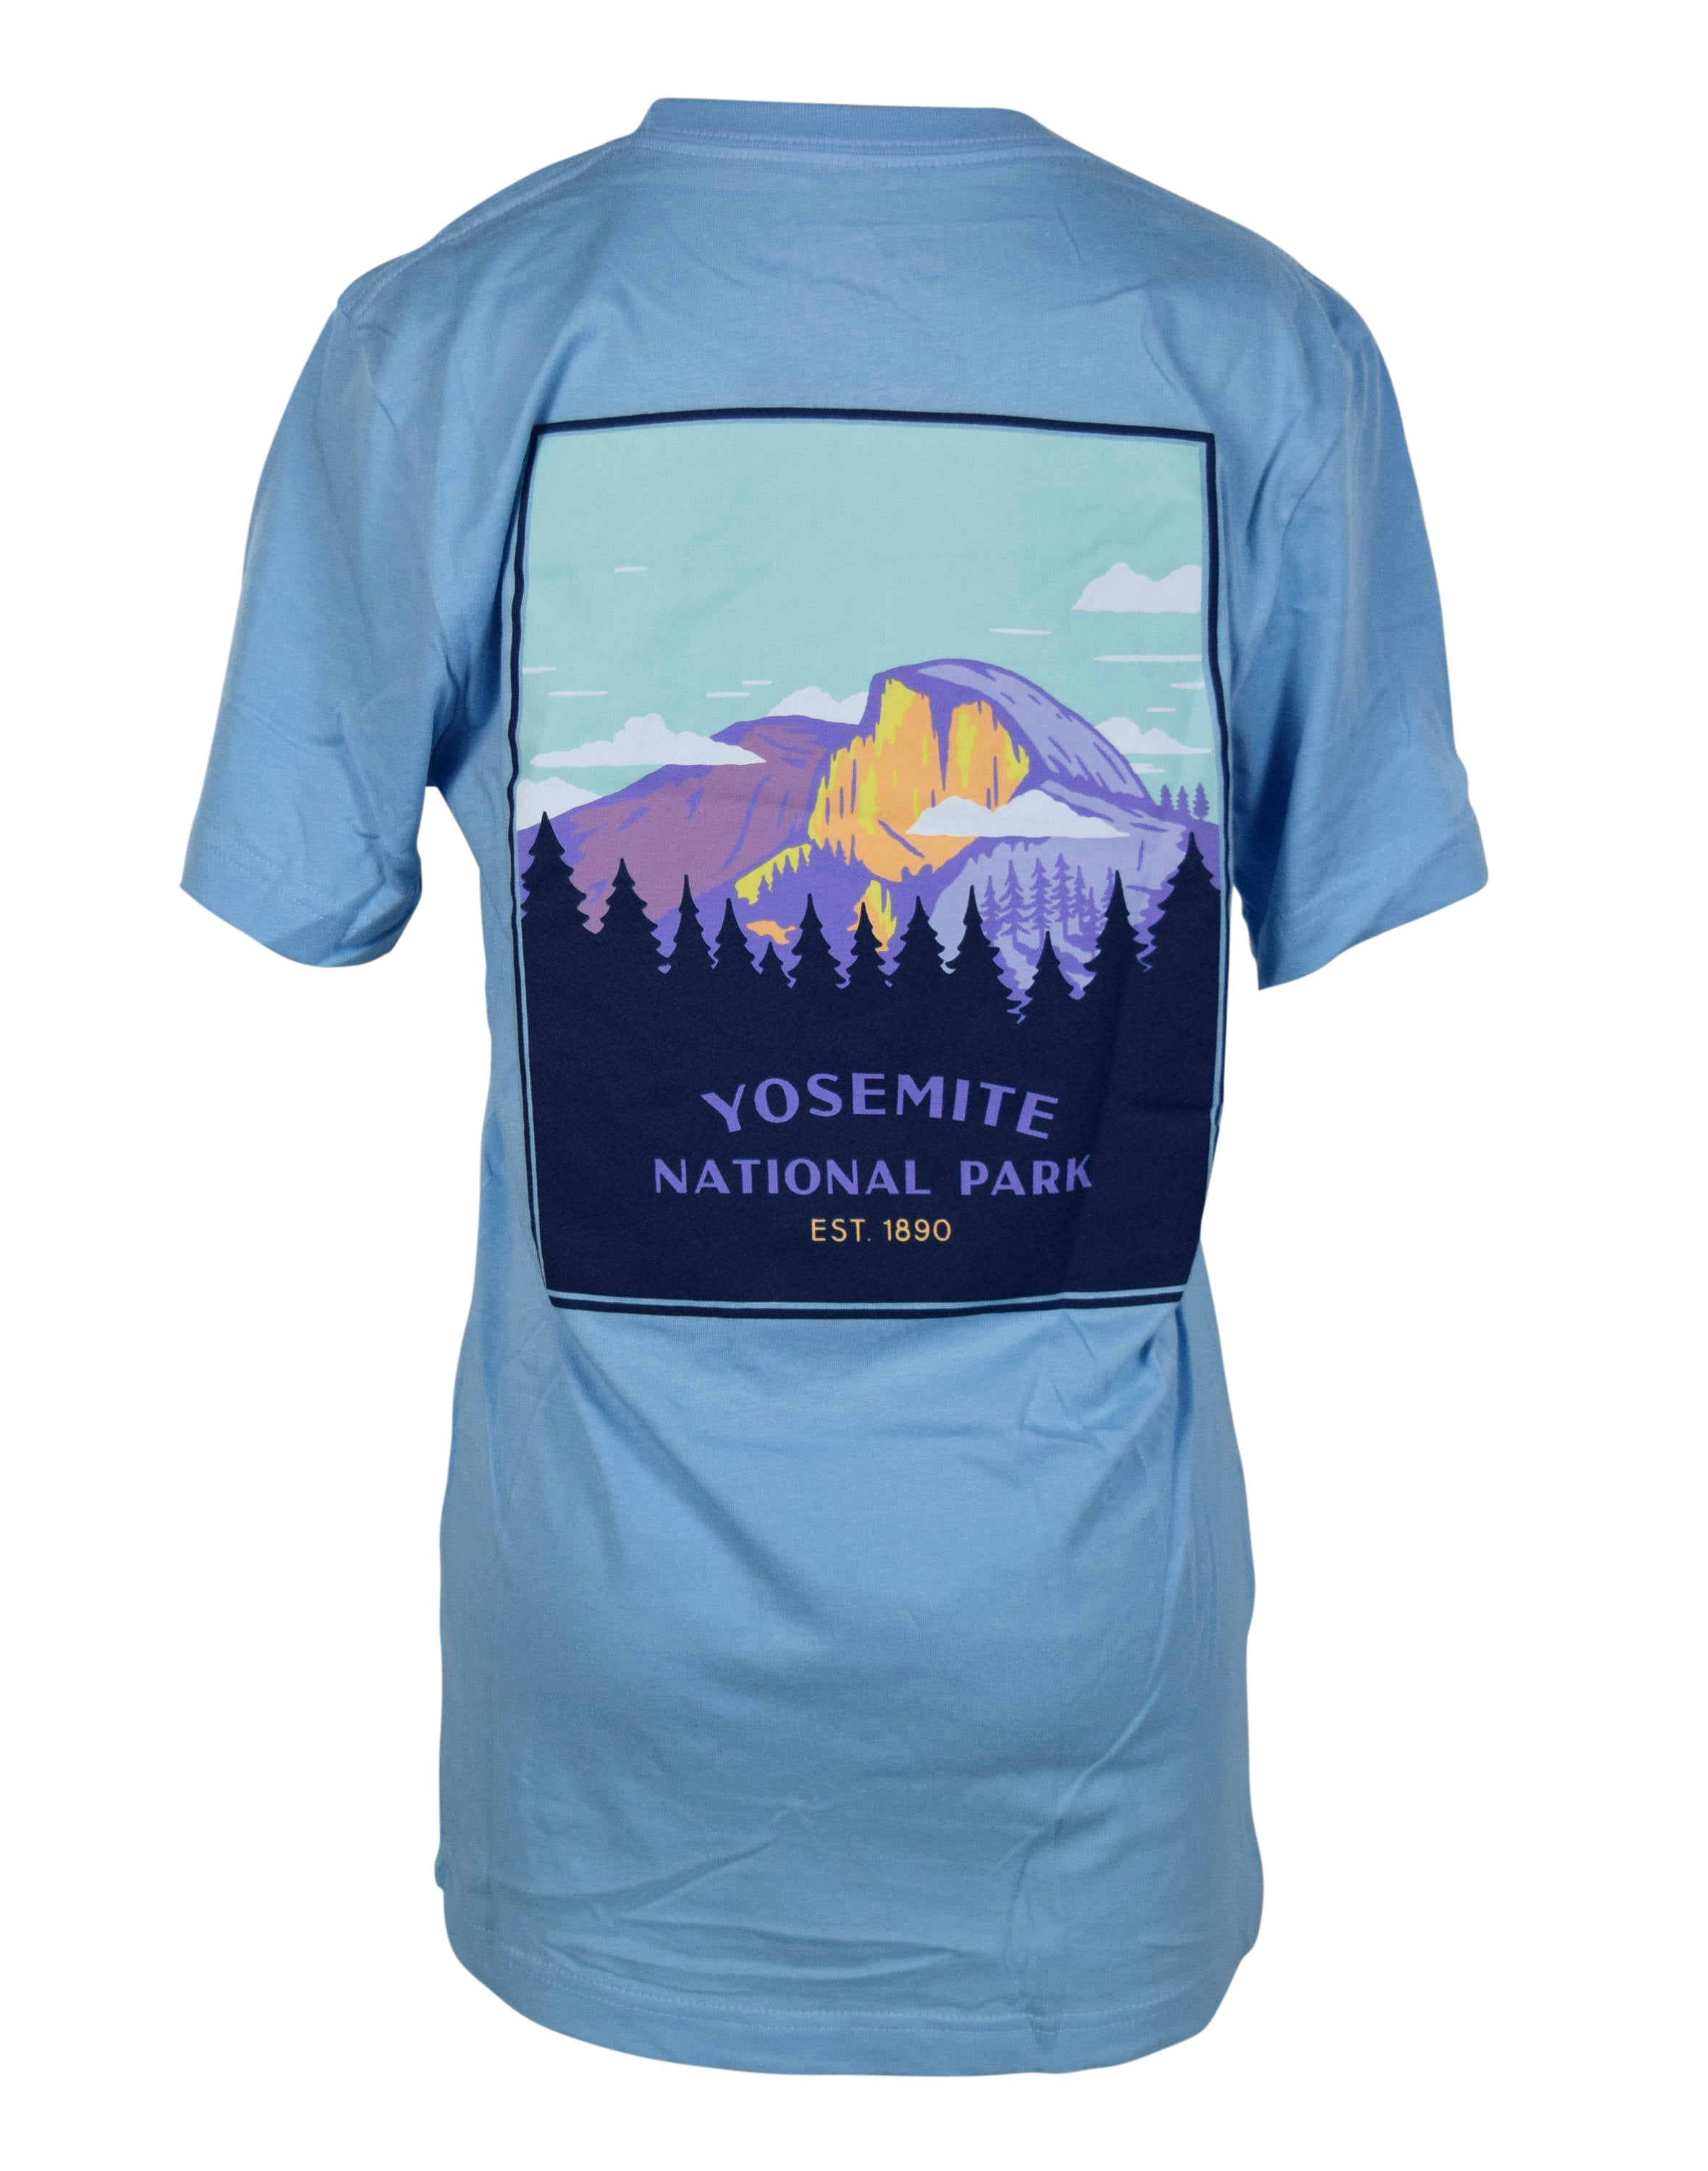 Sendero Provisions Co. Yosemite National Park "Ocean" T-Shirt (S)